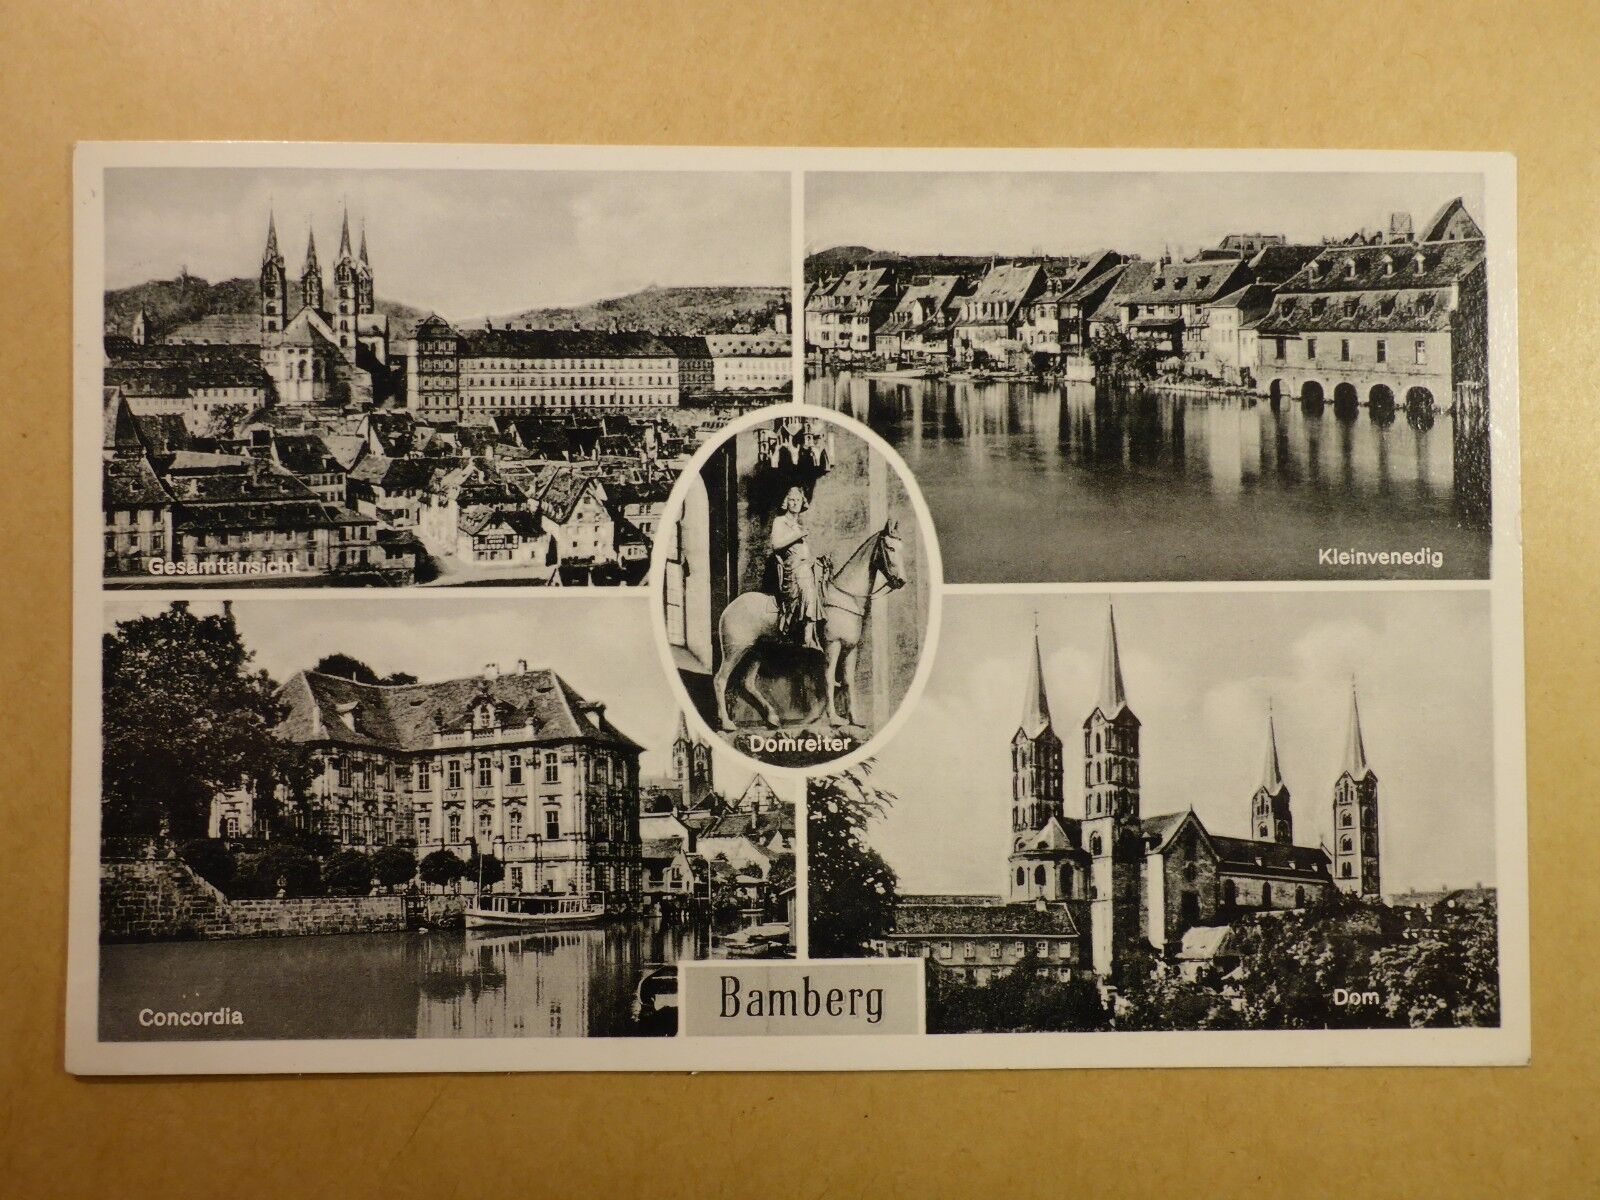 Ak Old Postcard Bamberg Multi Image General View Kleinvenedig Concordia Dom